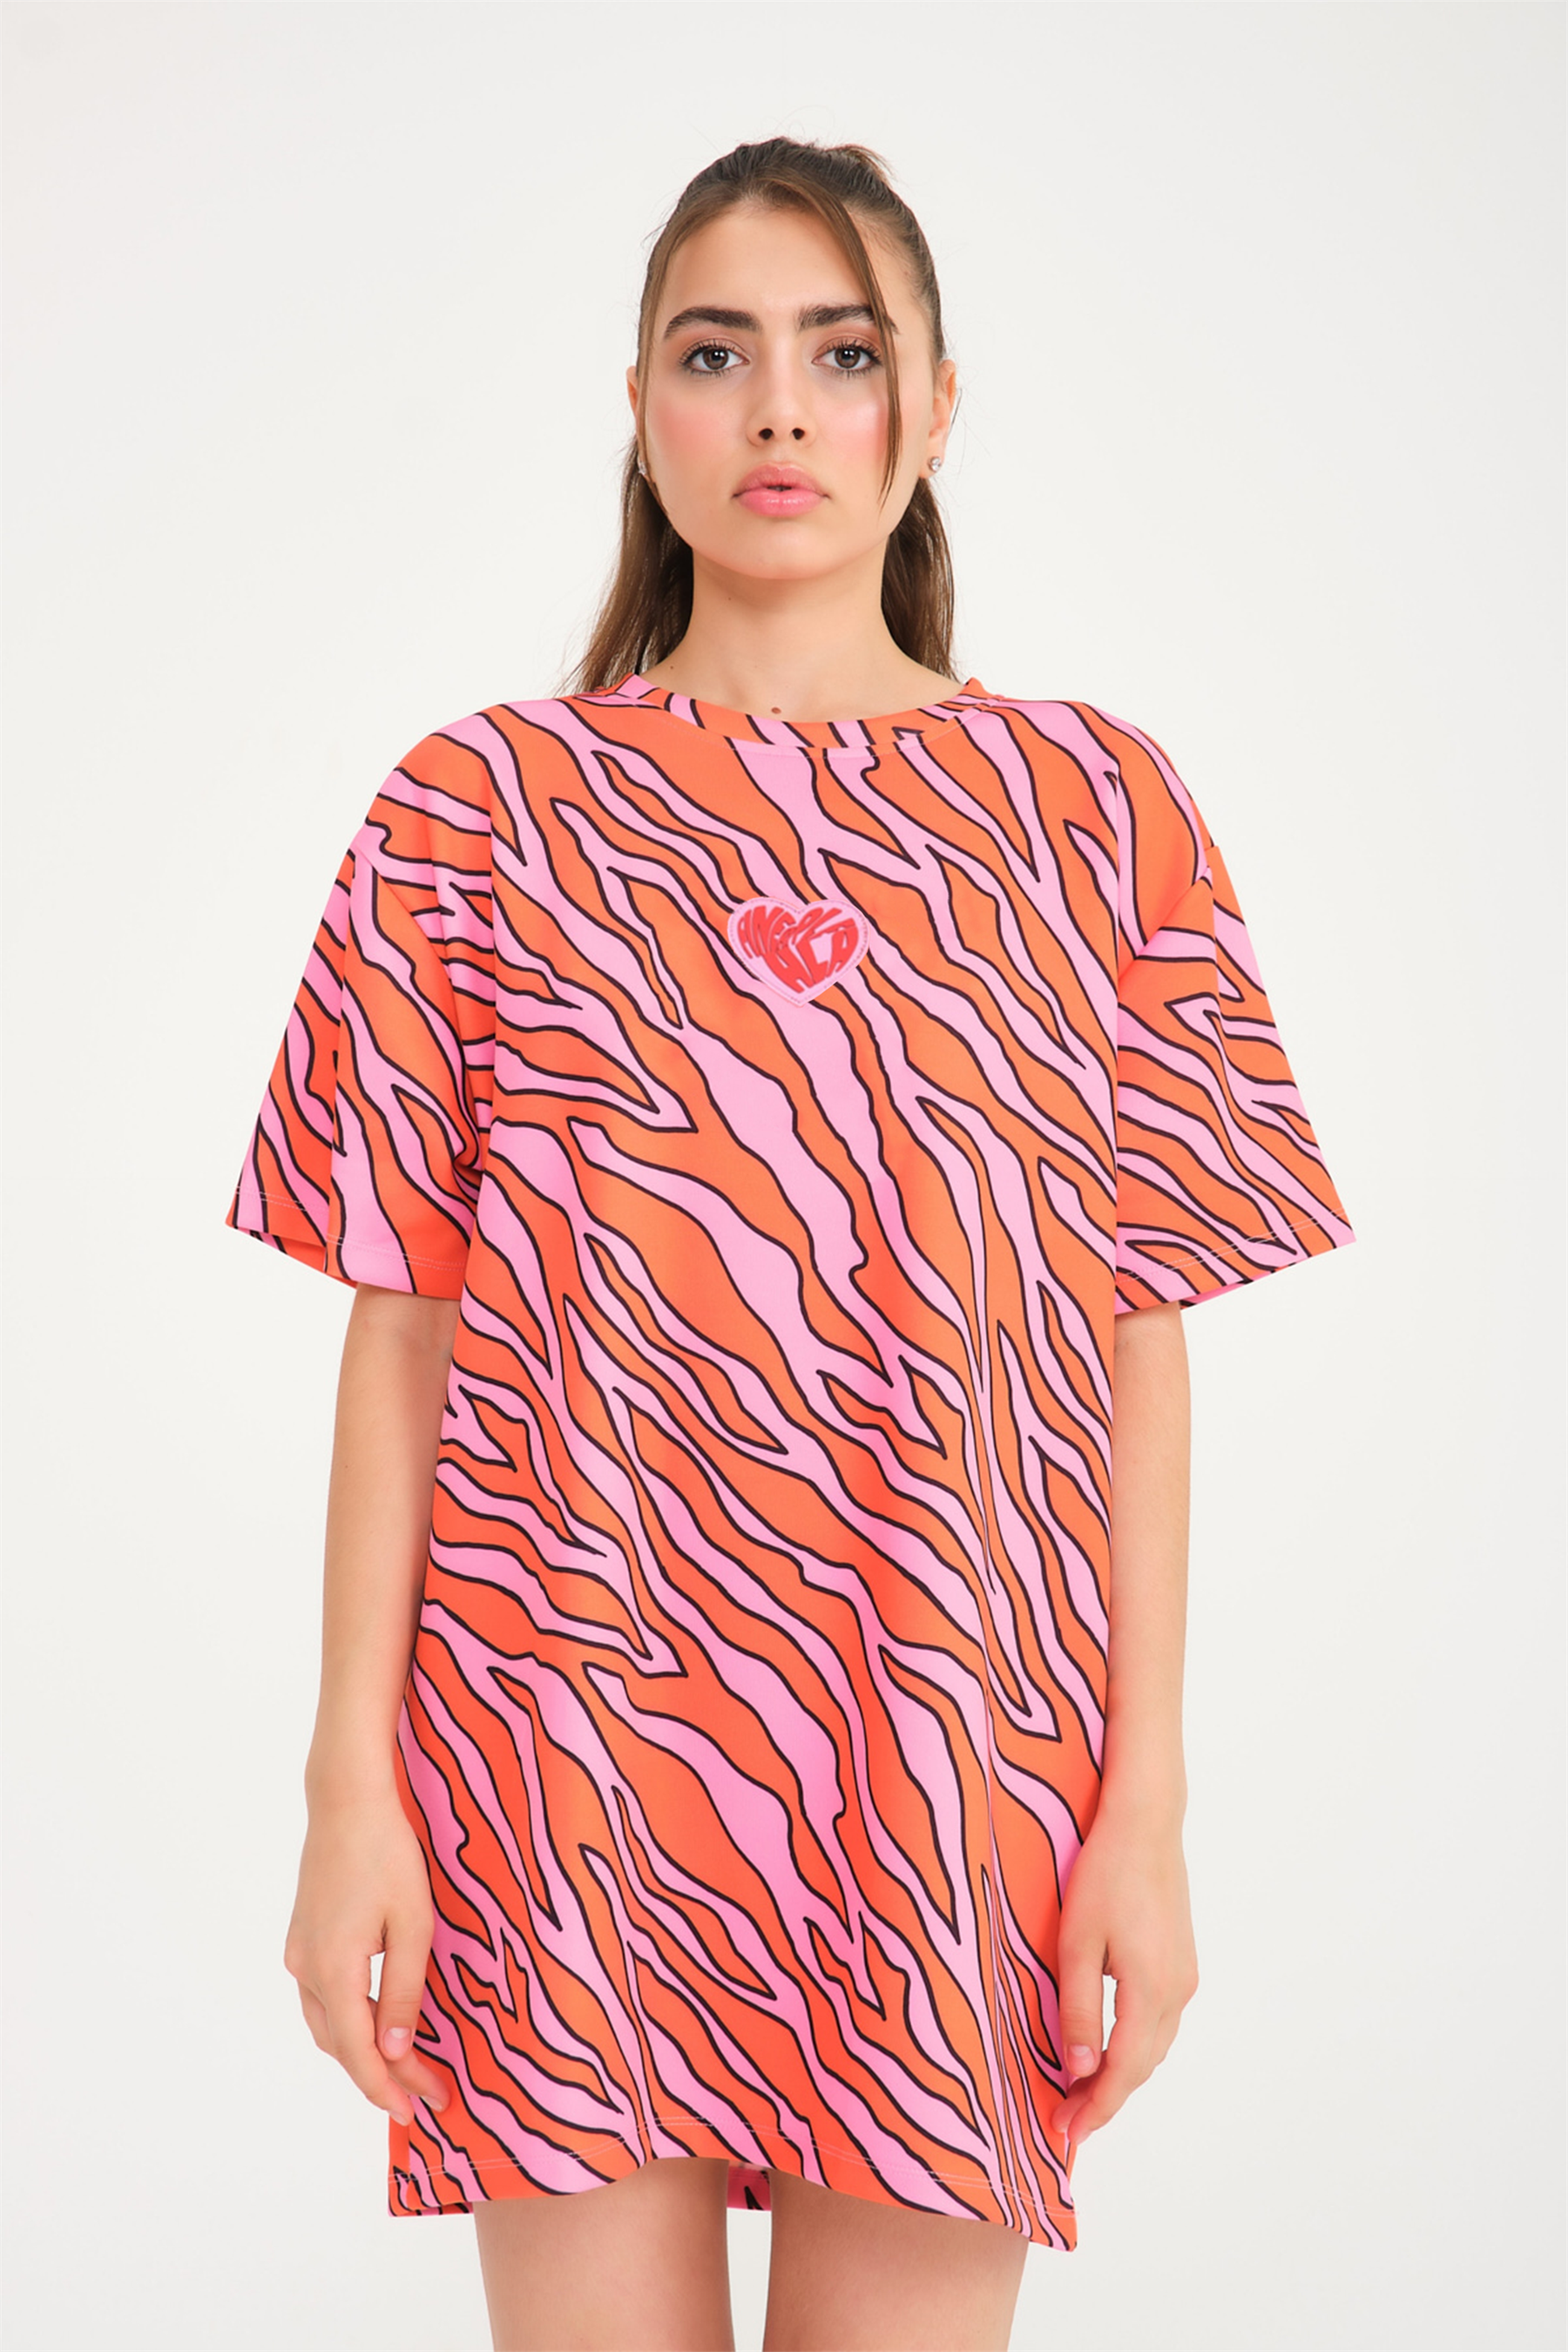 Ala X Fineapple Pembe Turuncu Zebra T-shirt Elbise